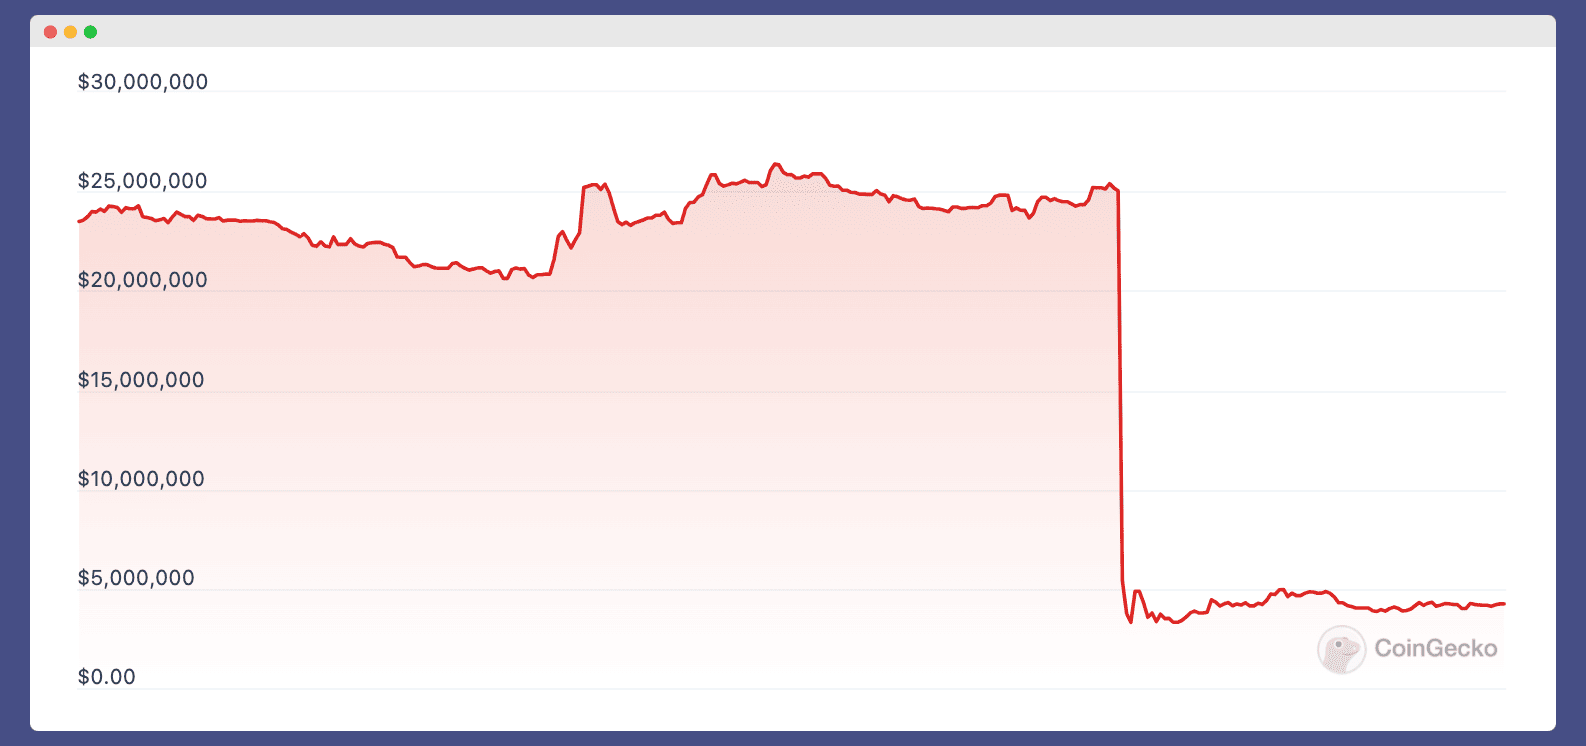 moon price drop after reddit announcement